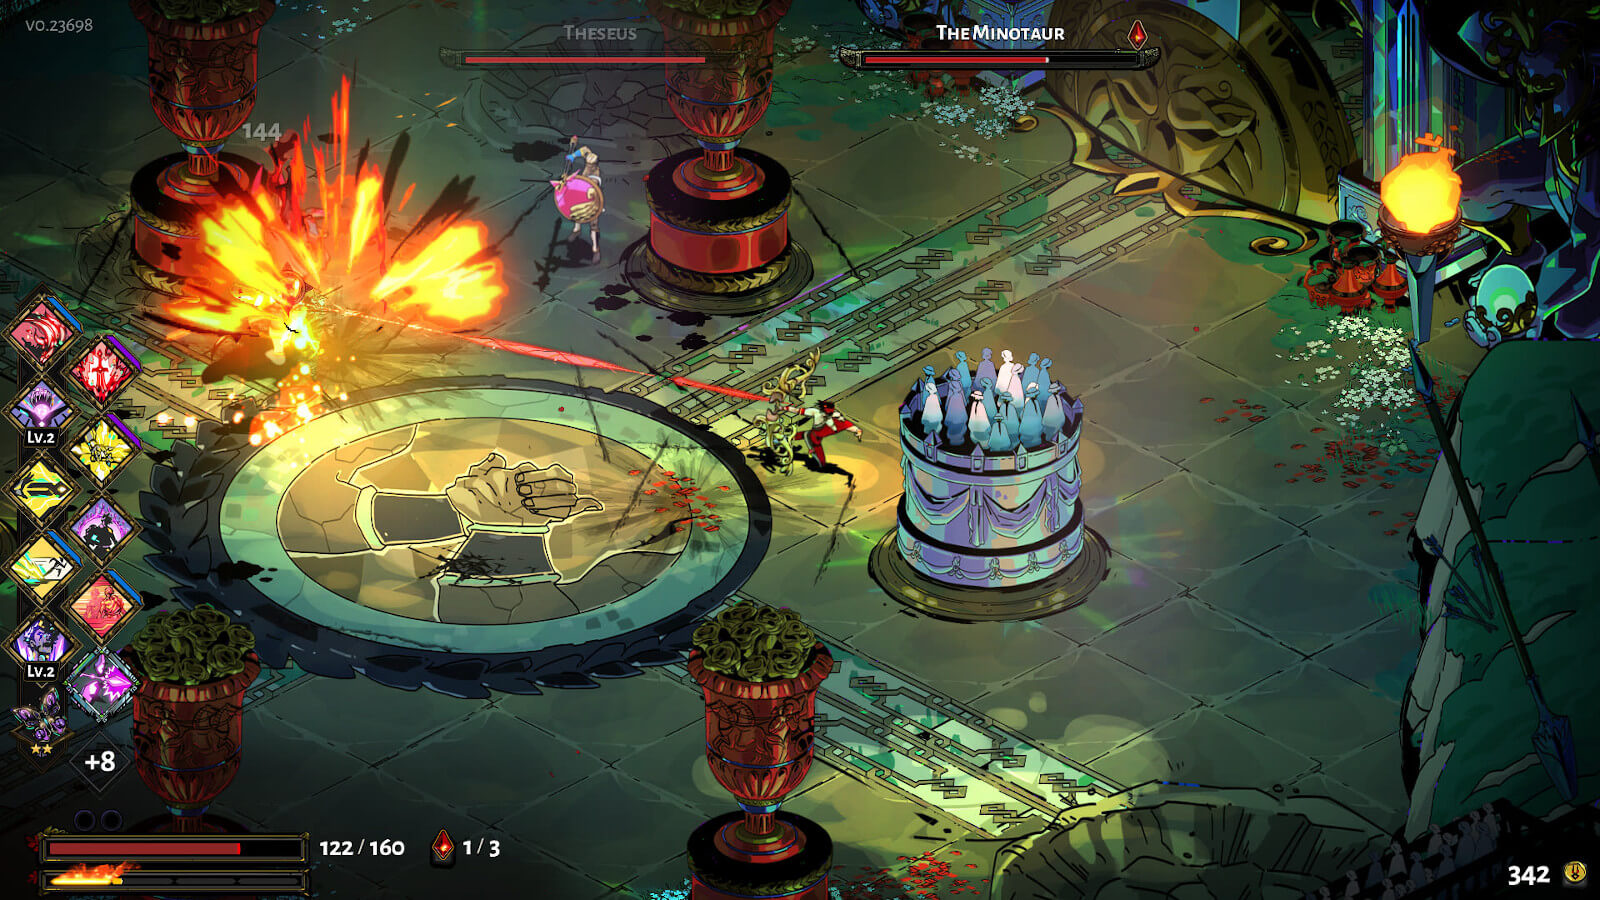 Screenshot of combat mechanics in the game Hades.